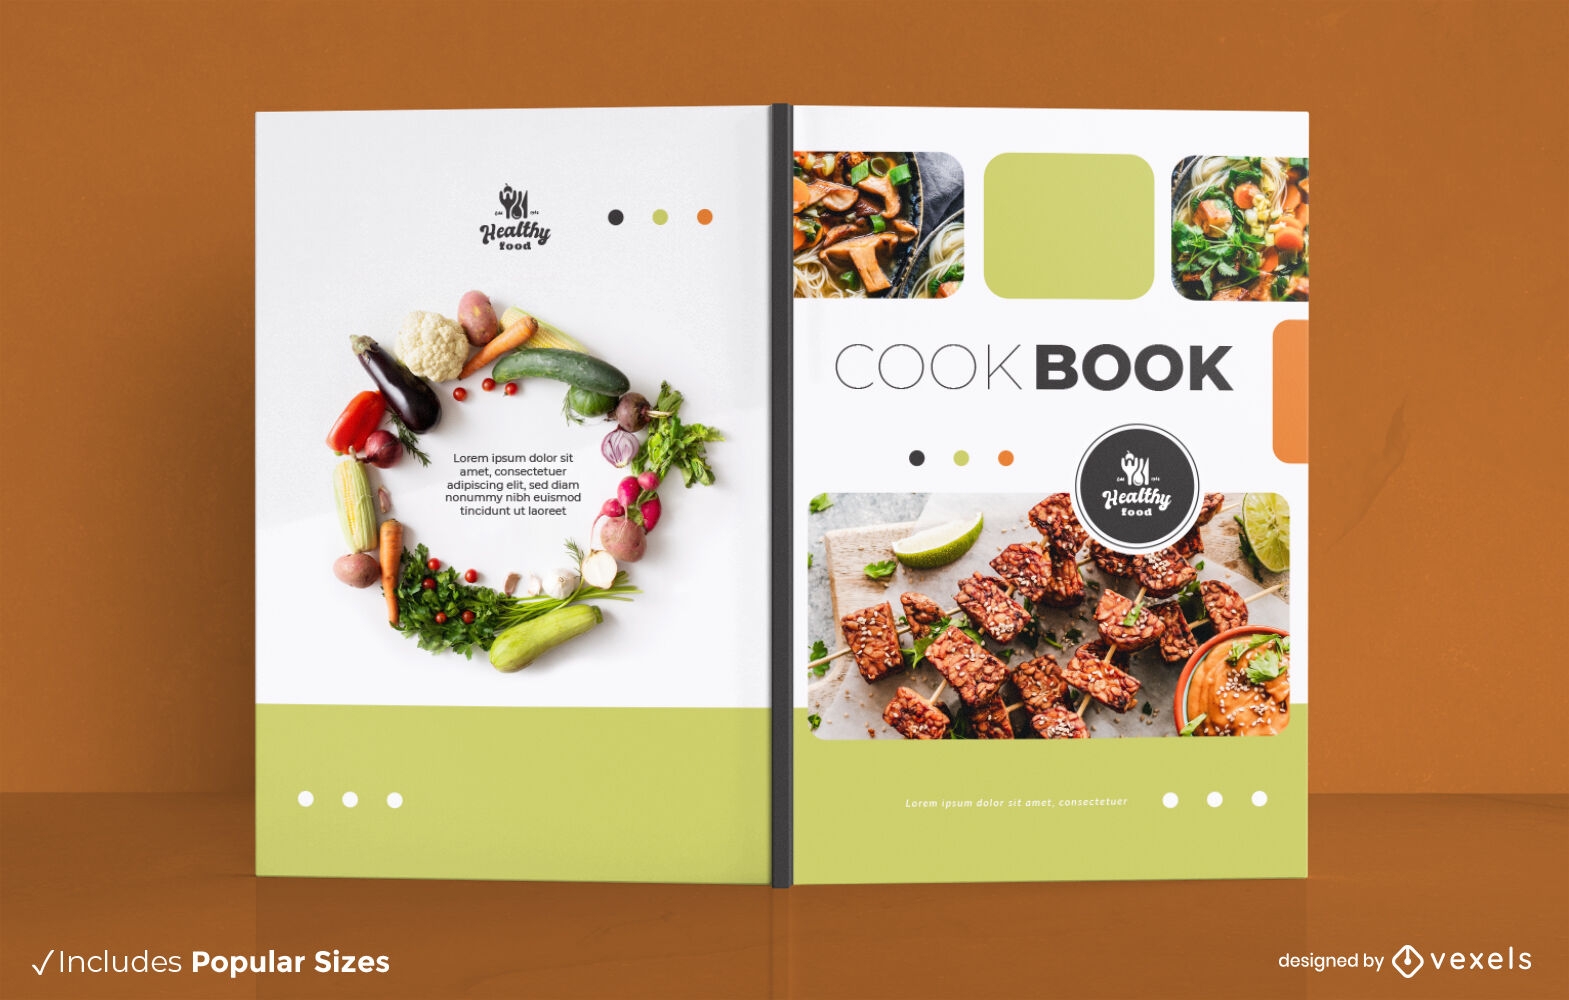 Descarga Vector De Diseño De Portada De Libro De Recetas De Libros De Cocina